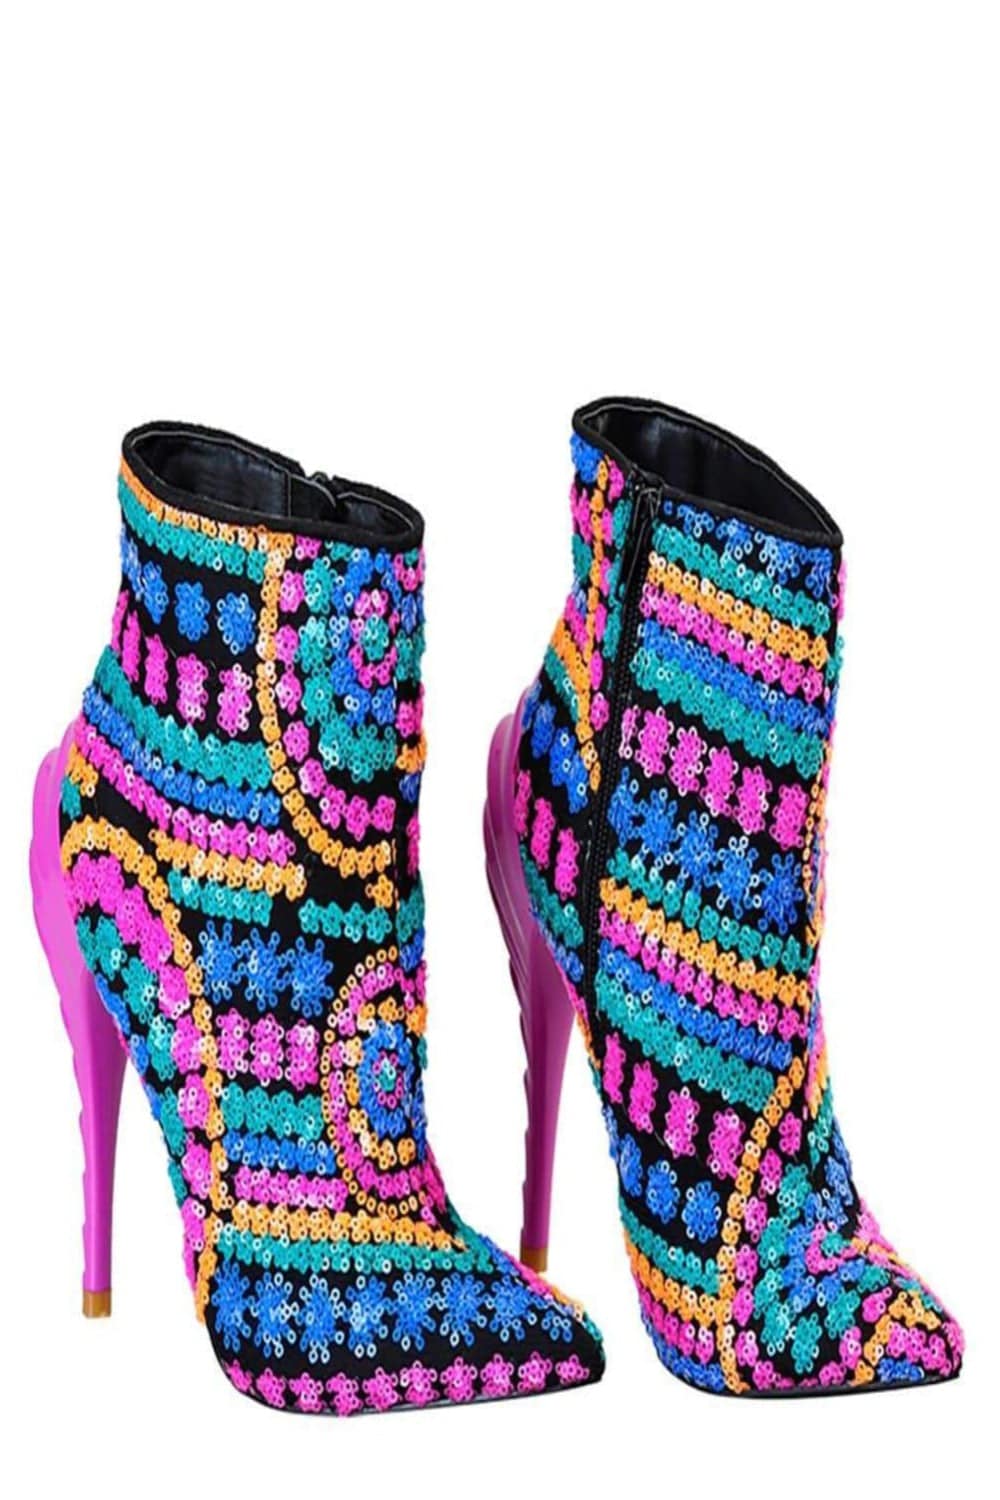 Fame Platform Chunky Block Heel Rhinestone Ankle Boots Hot Pink Satin Brand  New | eBay